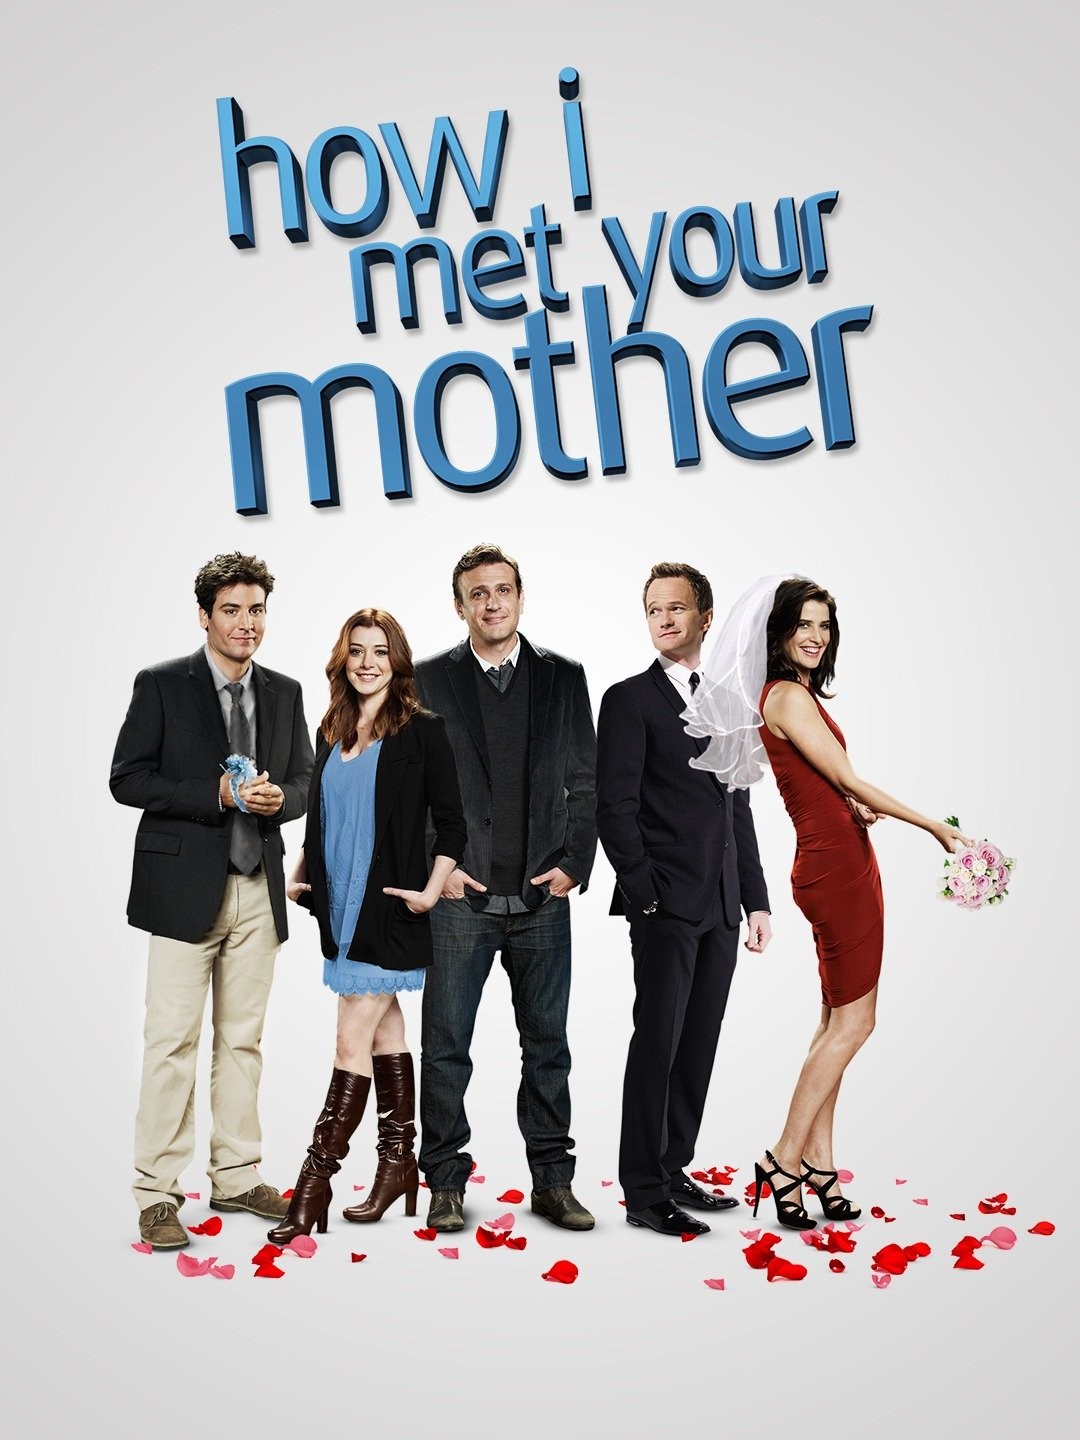 How I Met Your Mother (TV Series 2005–2014) - “Cast” credits - IMDb